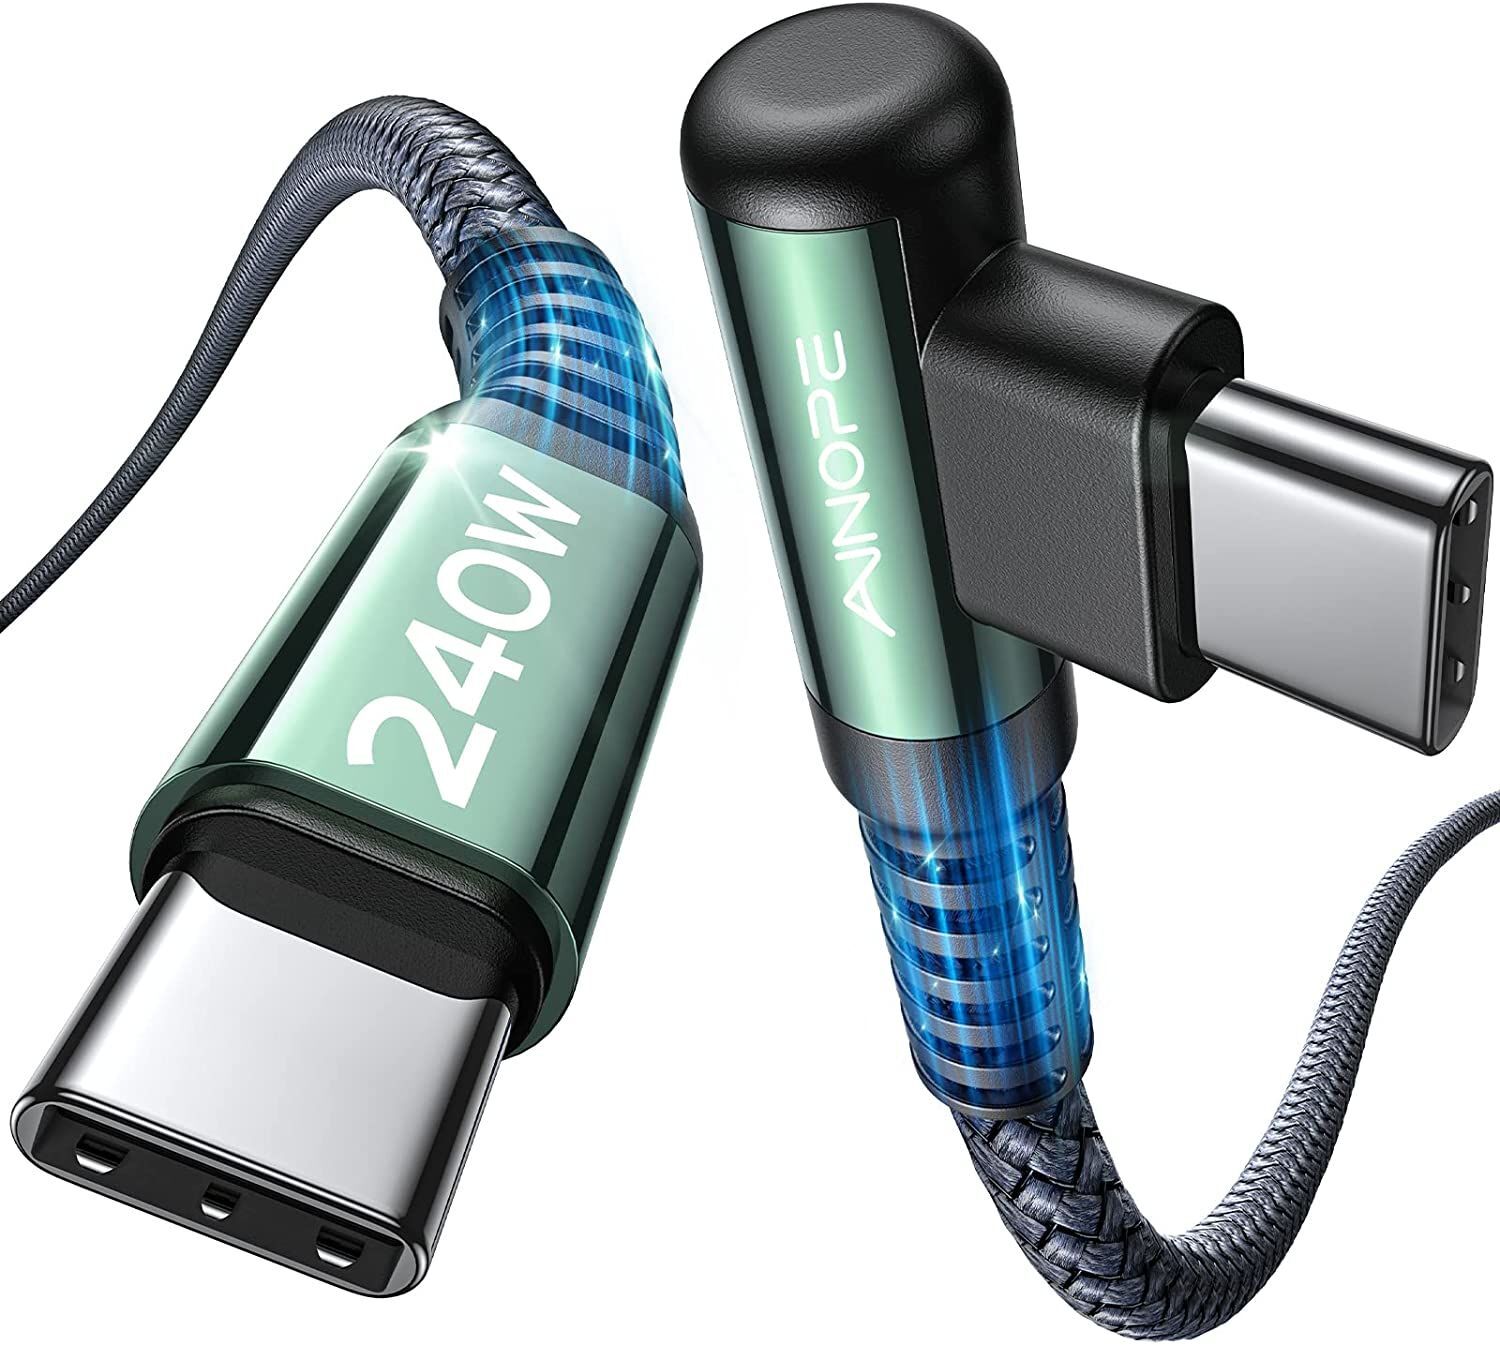 UGREEN Cargador USB C de 140 W y cable USB C a USB C de 240 W y 6.6 pies